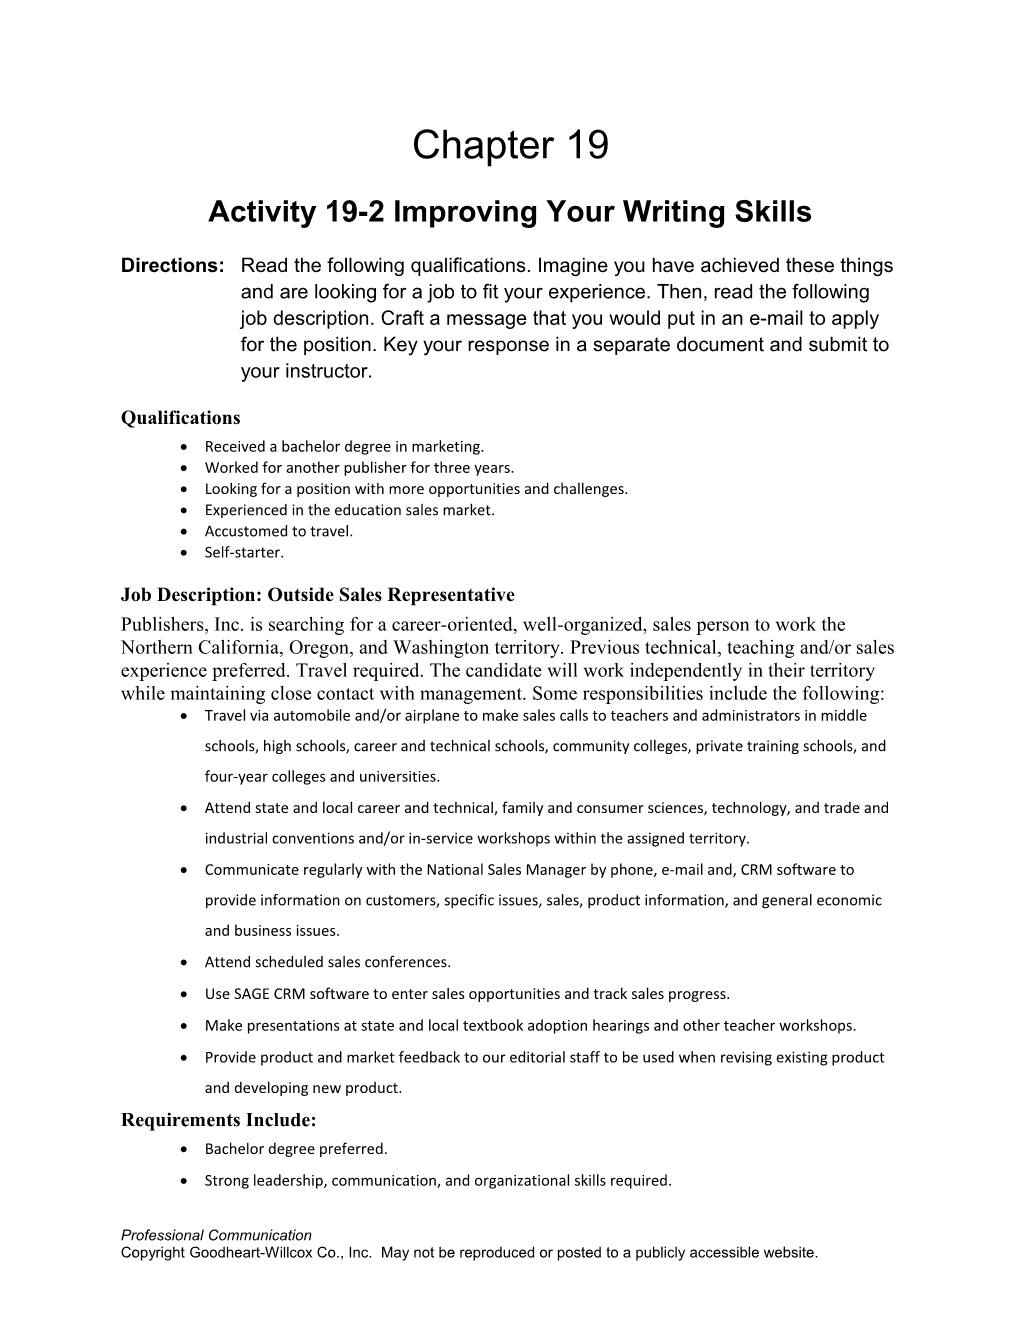 Activity 19-2Improving Your Writing Skills